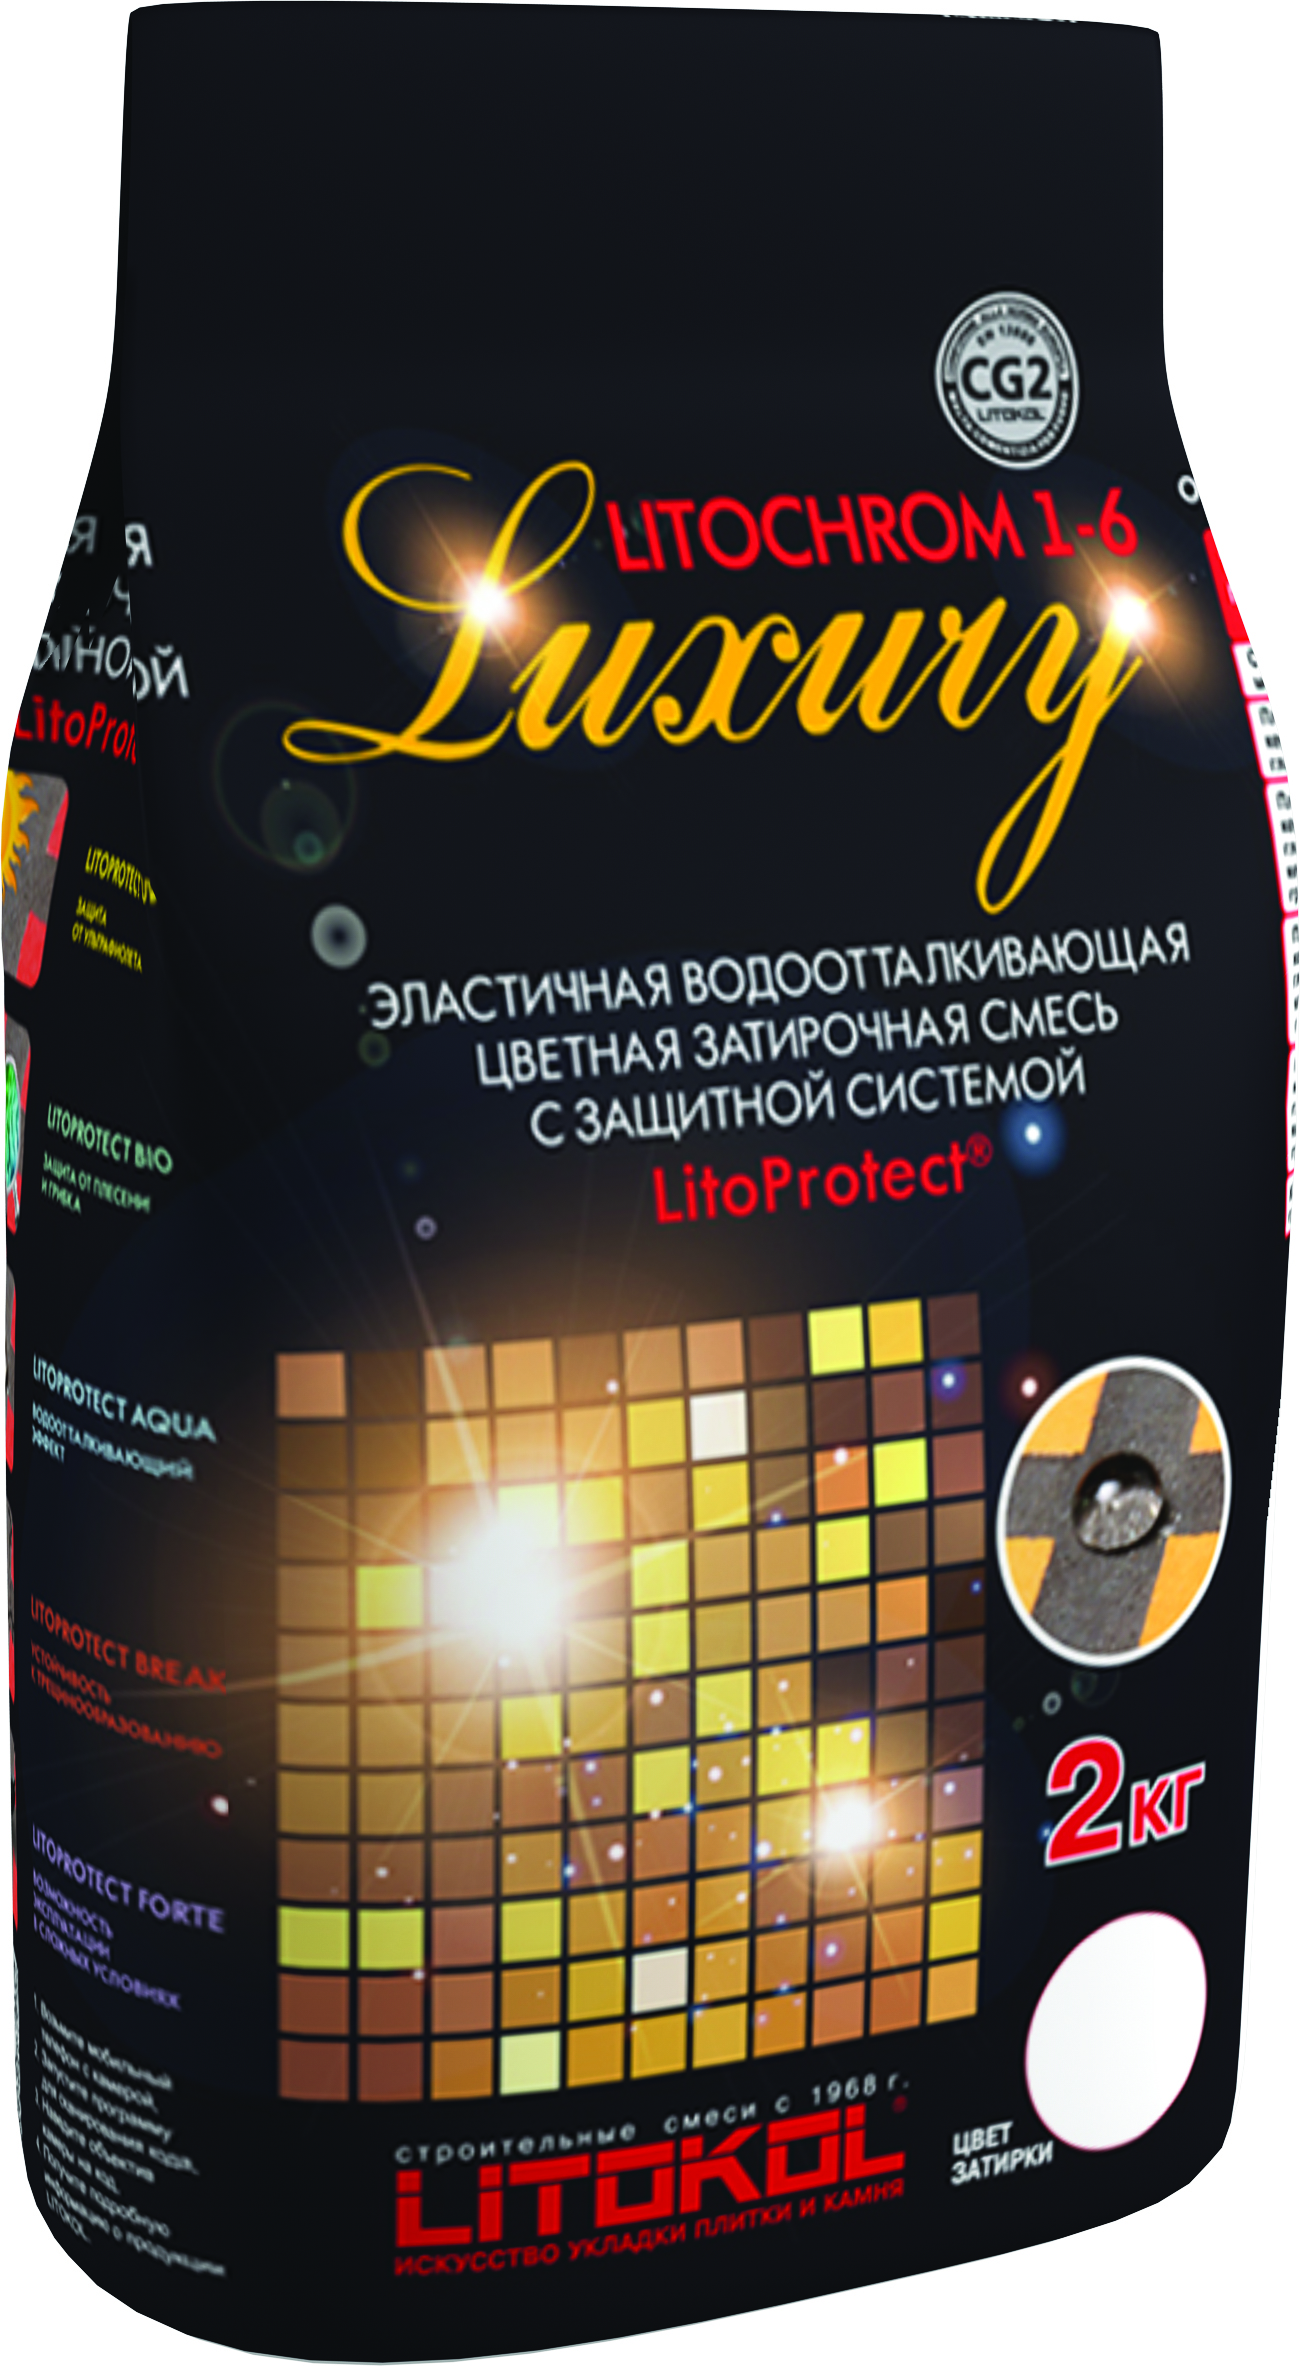 Купить Litokol Litochrom 1-6 Luxury C.100, 2 кг